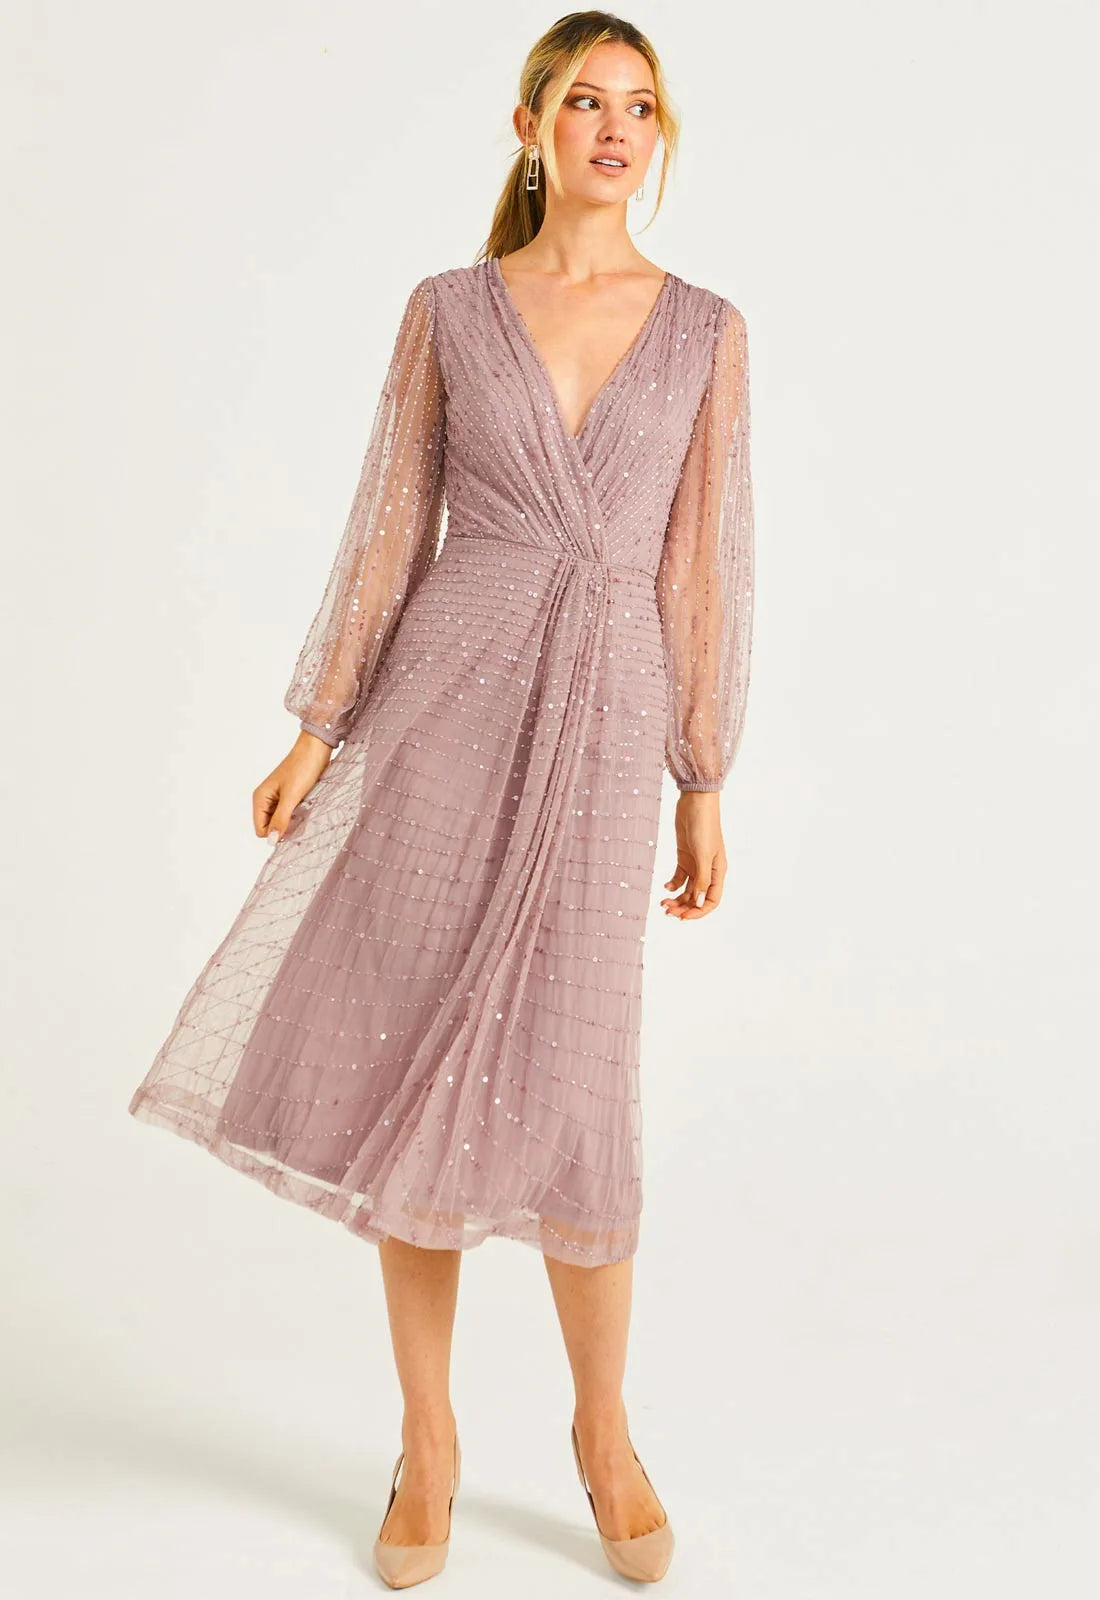 Angeleye Lavender mesh sleeve cocktail dress